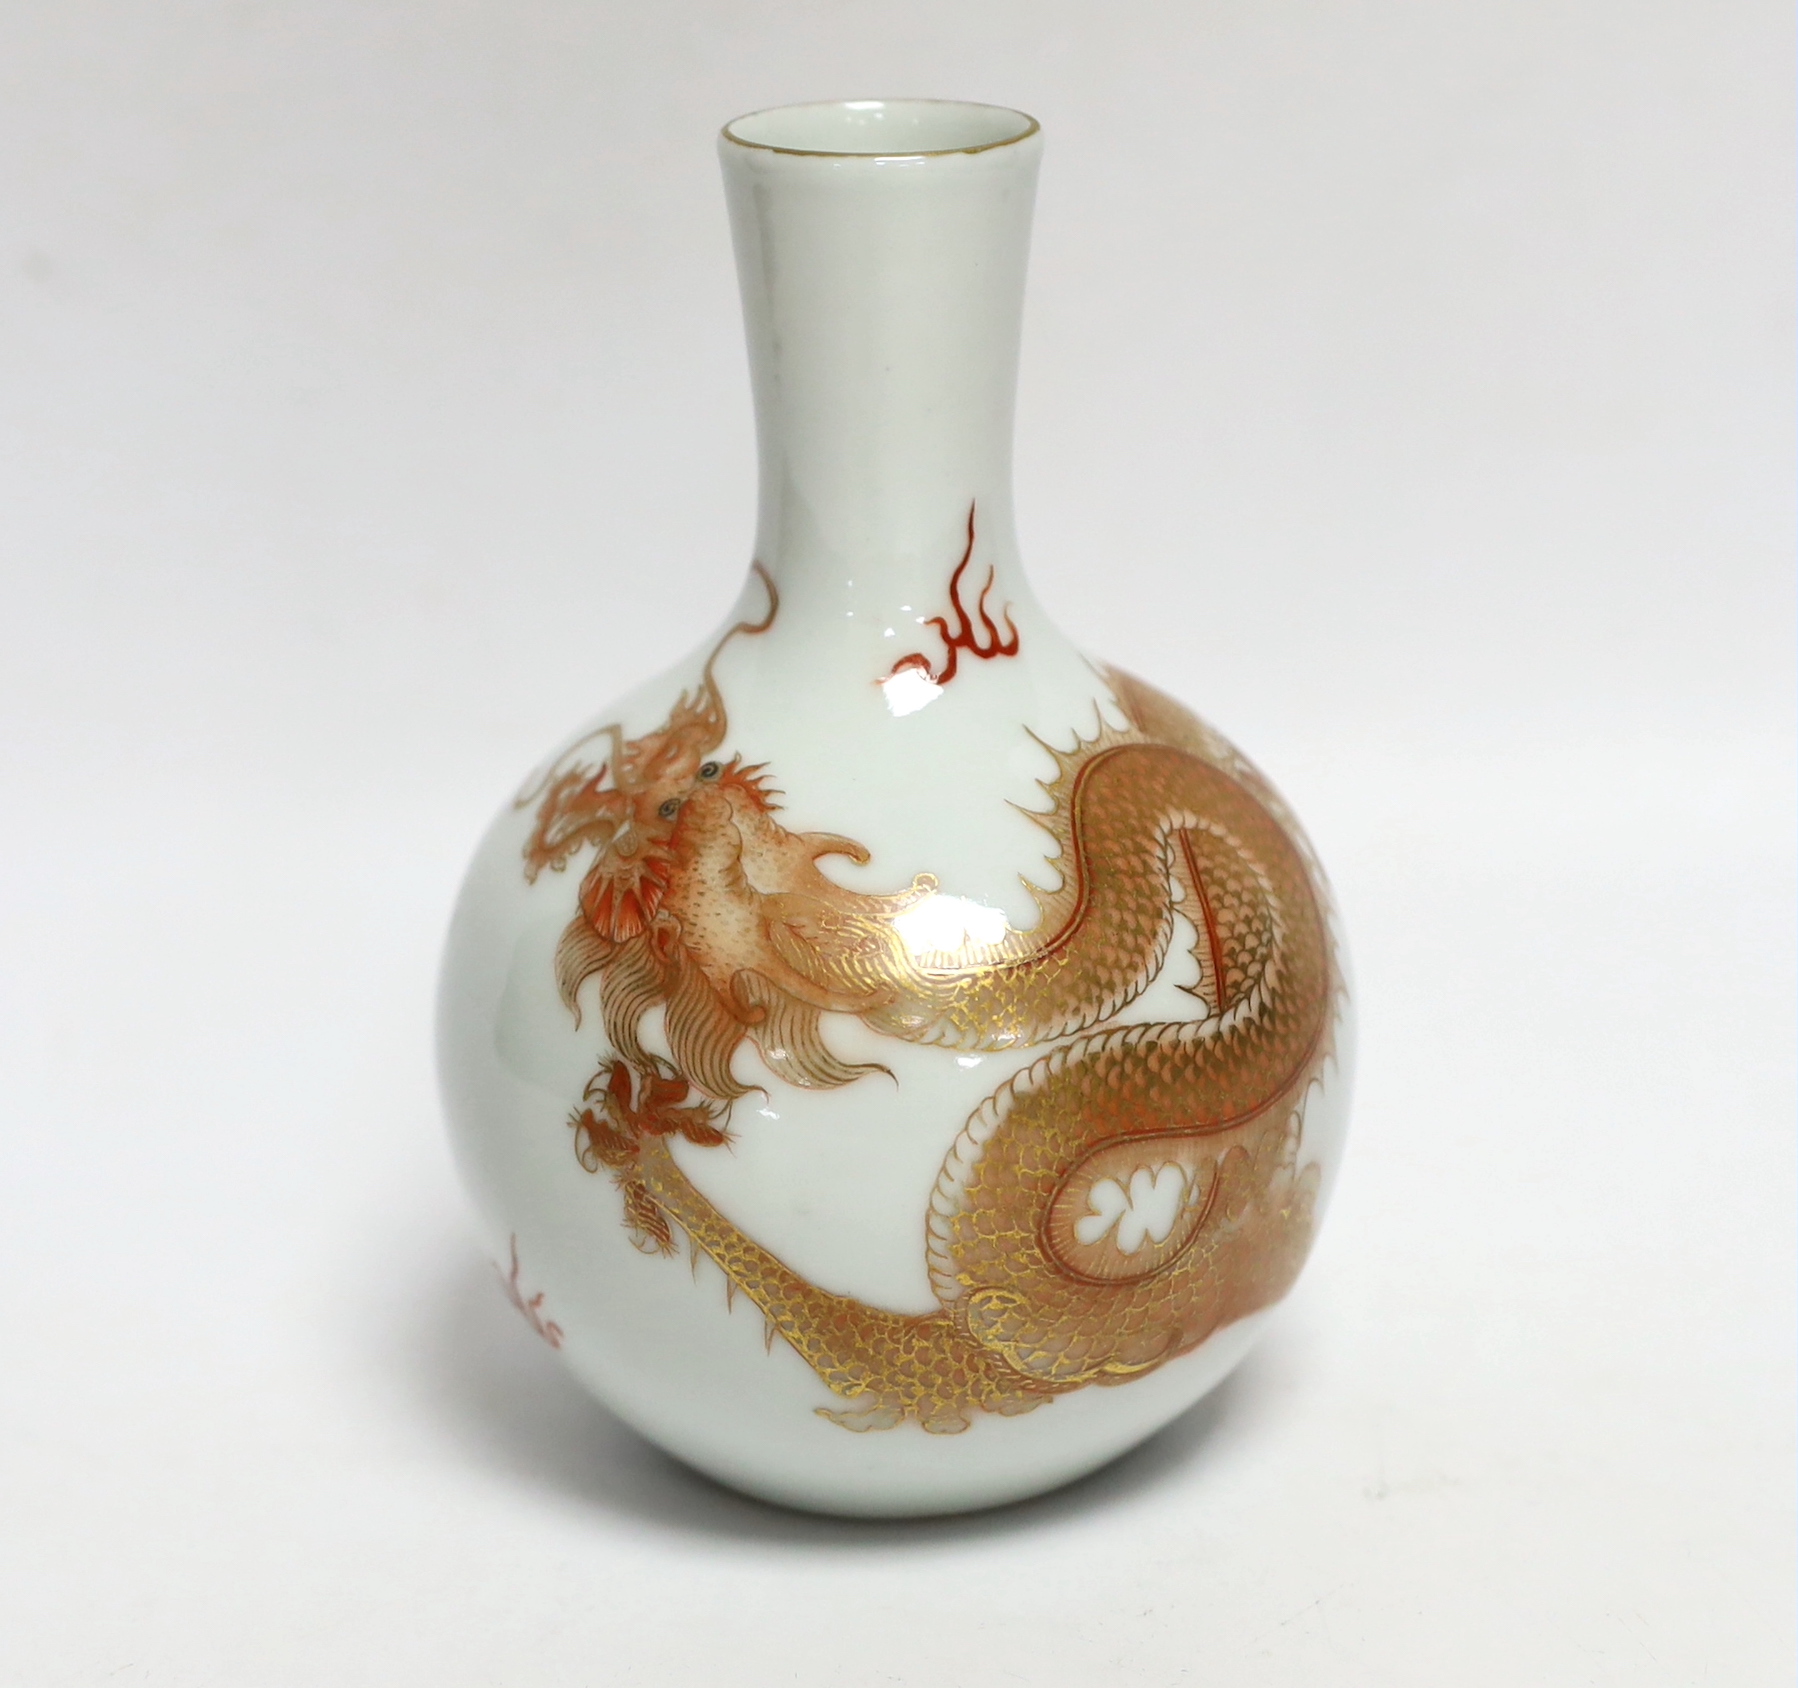 A Chinese rouge de fer dragon bottle vase, 14cm high (boxed)